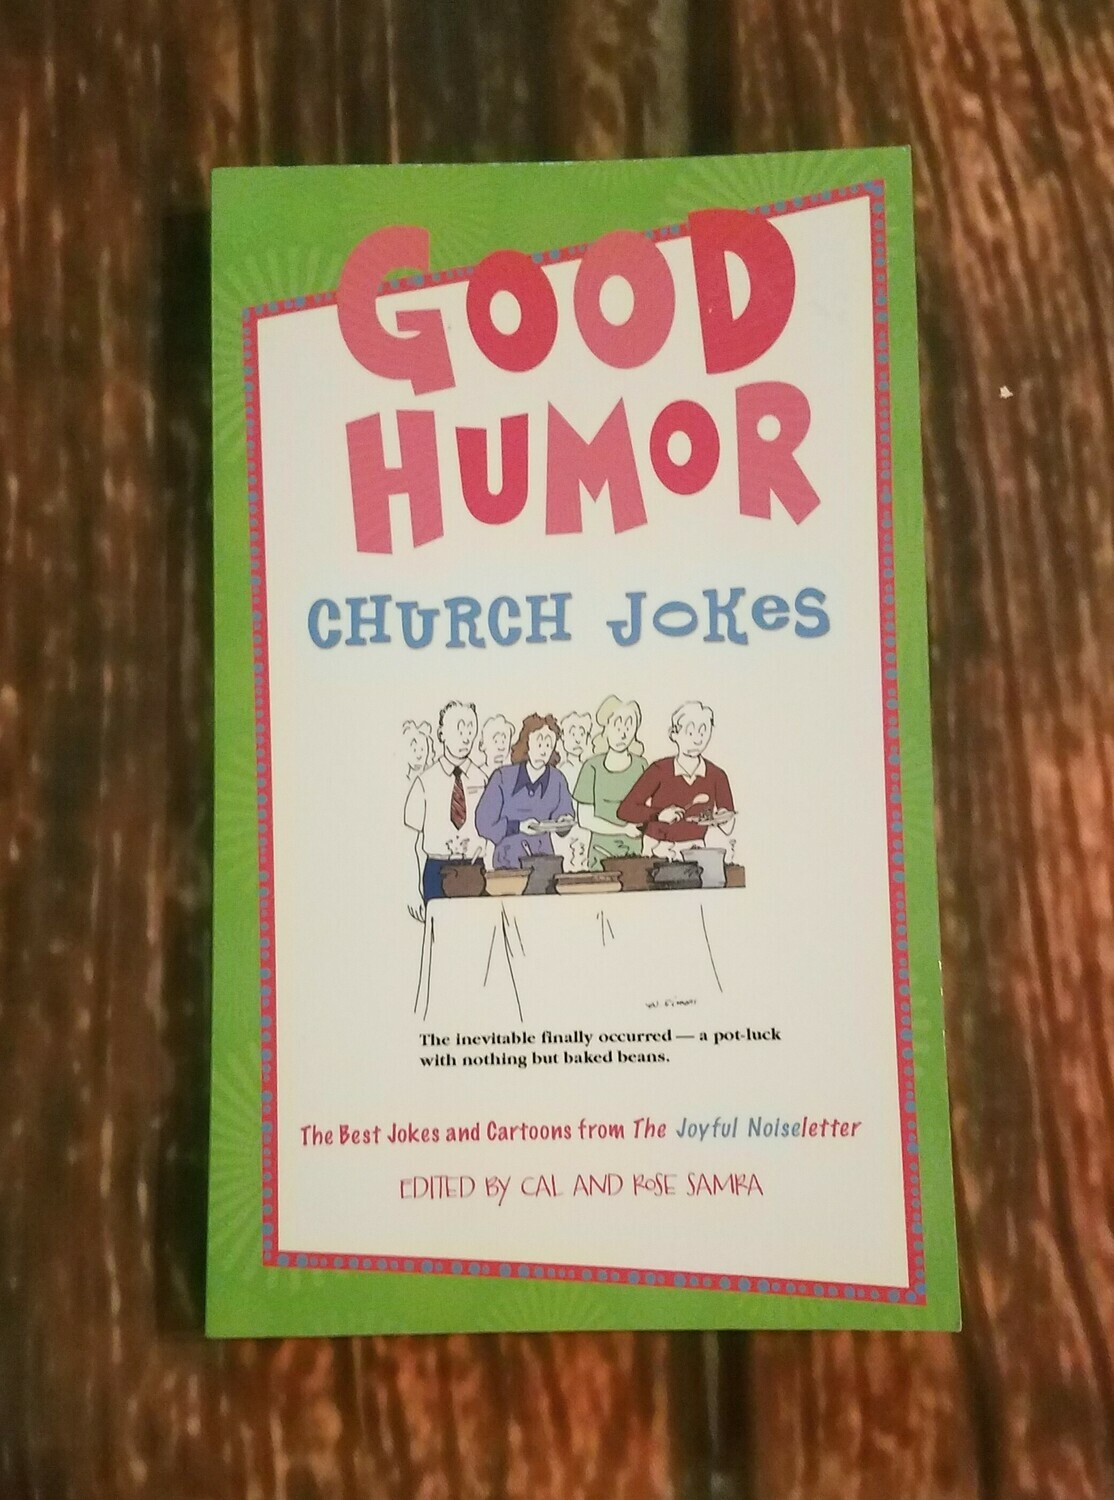 Good Humor Church Jokes by Cal and Rose Samra